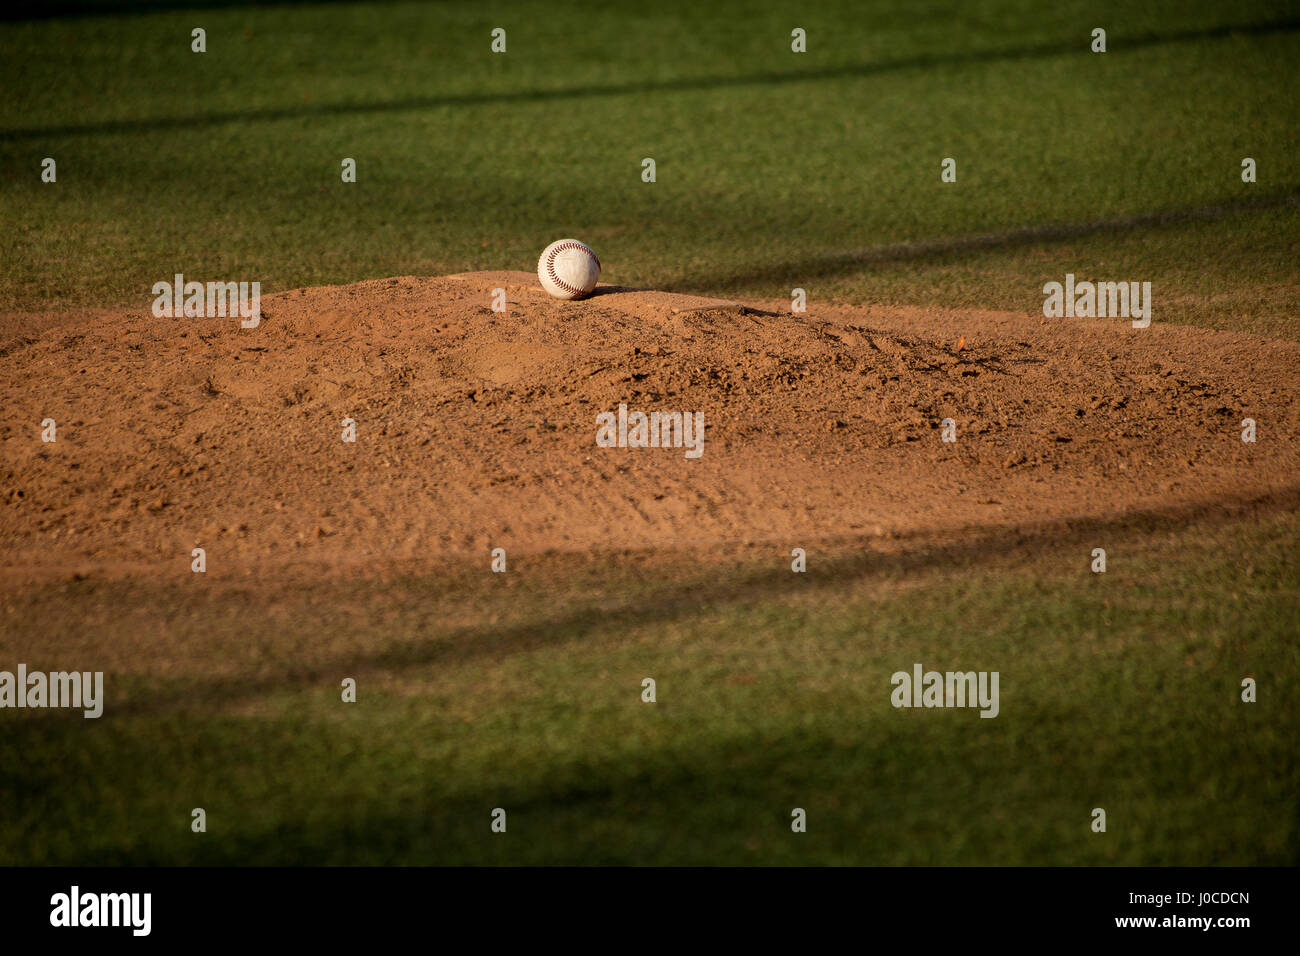 Pelota de béisbol en el montículo de arena en el campo de béisbol Foto de stock